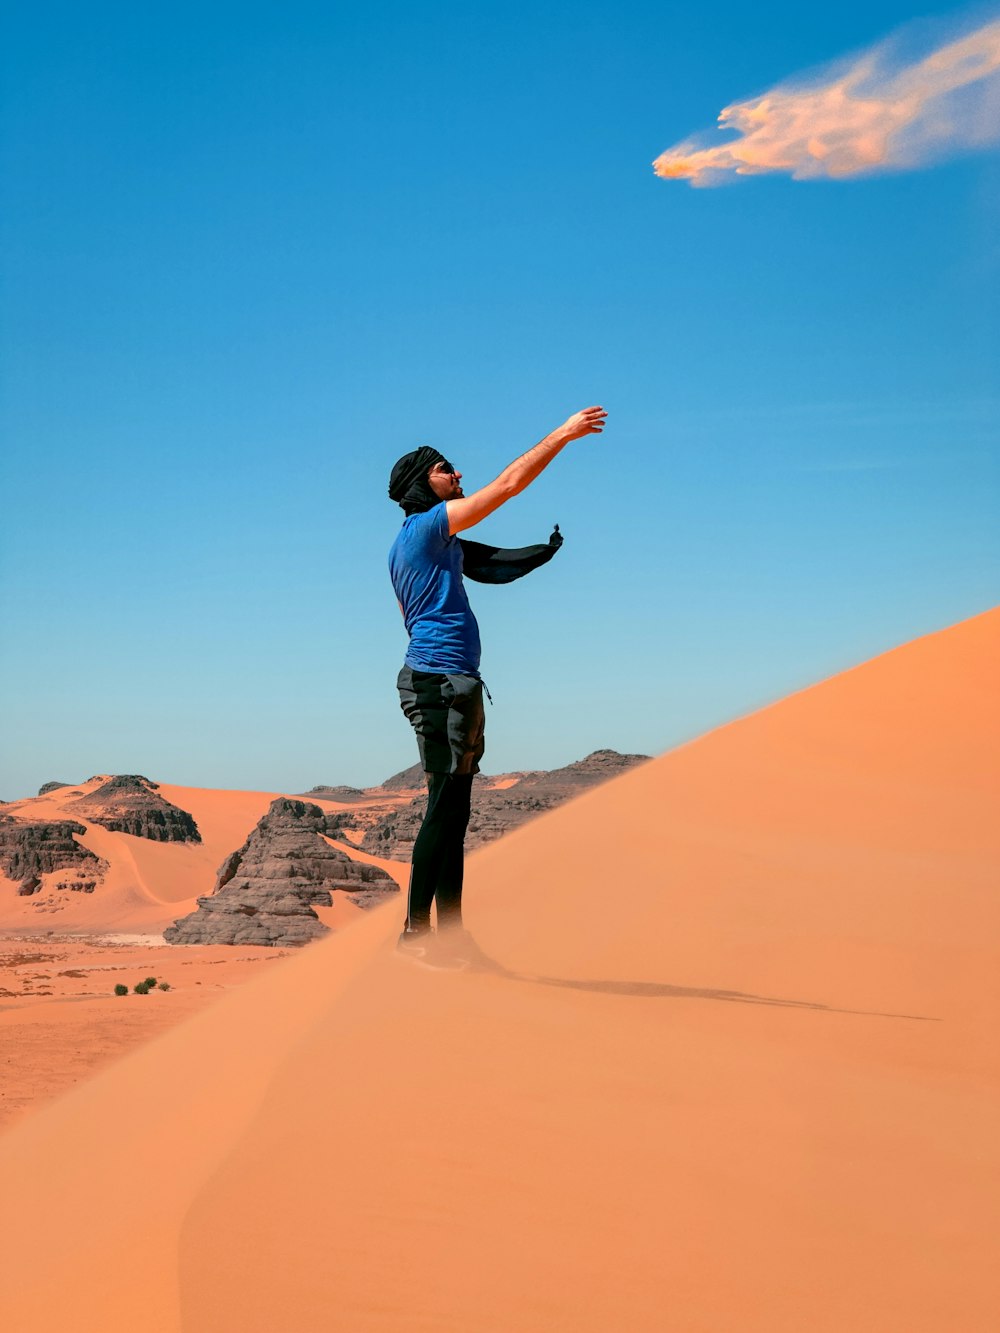 a man flying a kite in the desert